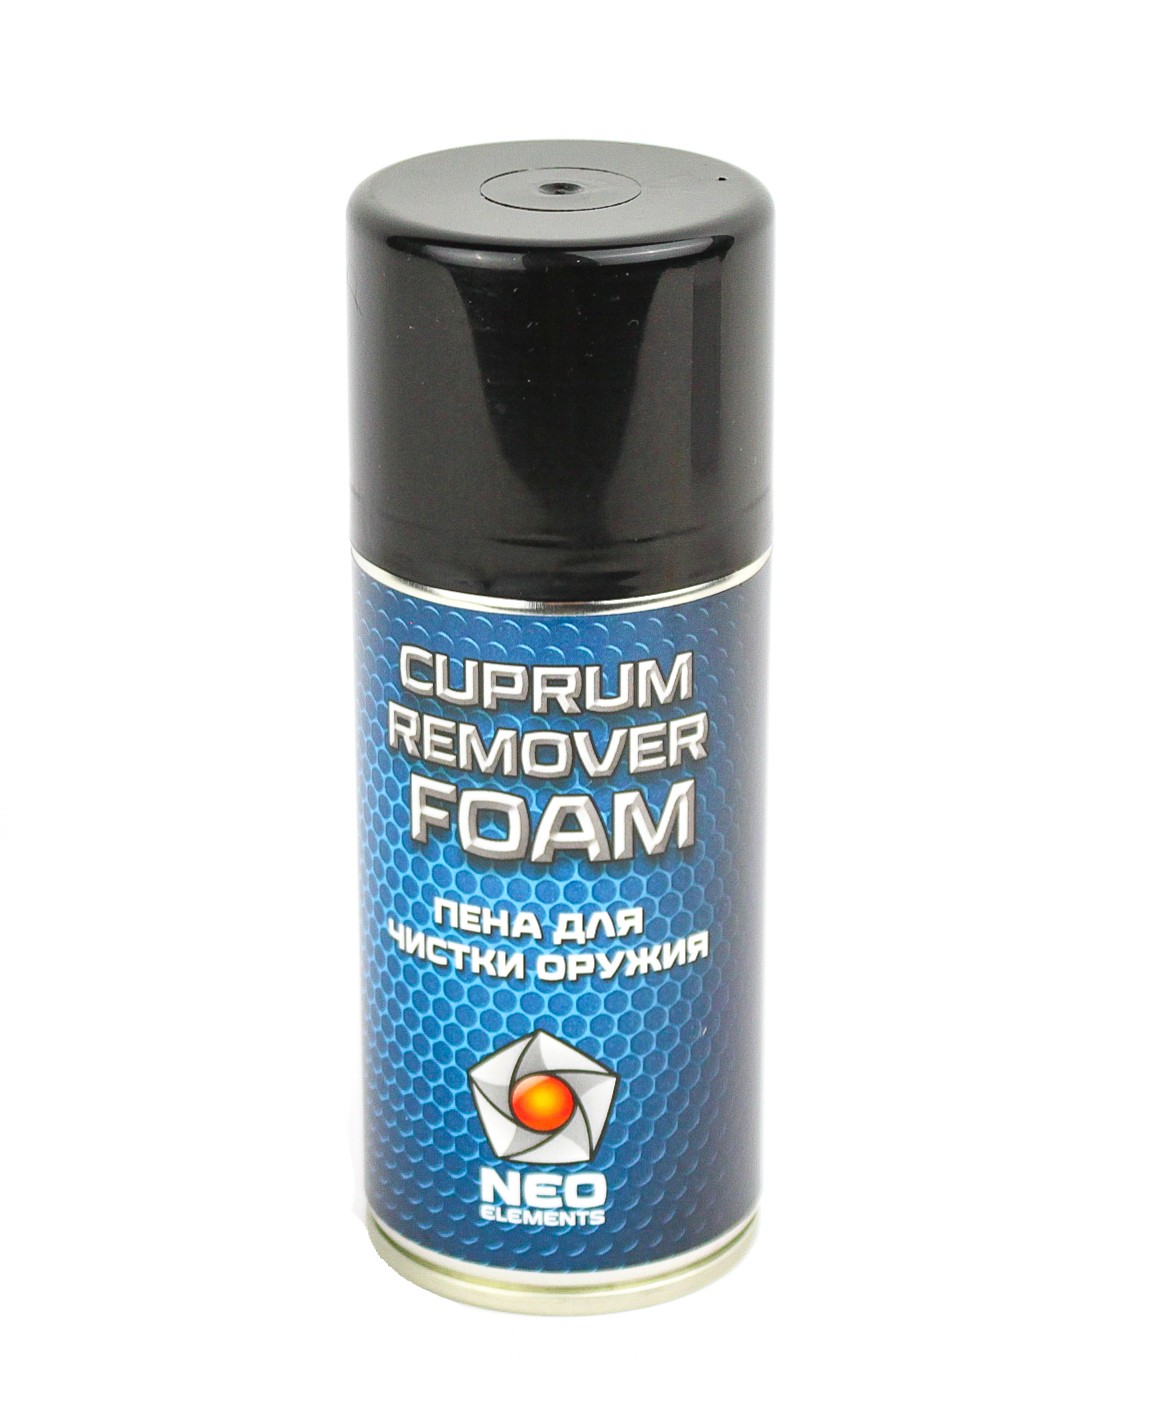 Пена Neo Elements Cuprum Remover Foam для чистки оружия 210мл - фото 1